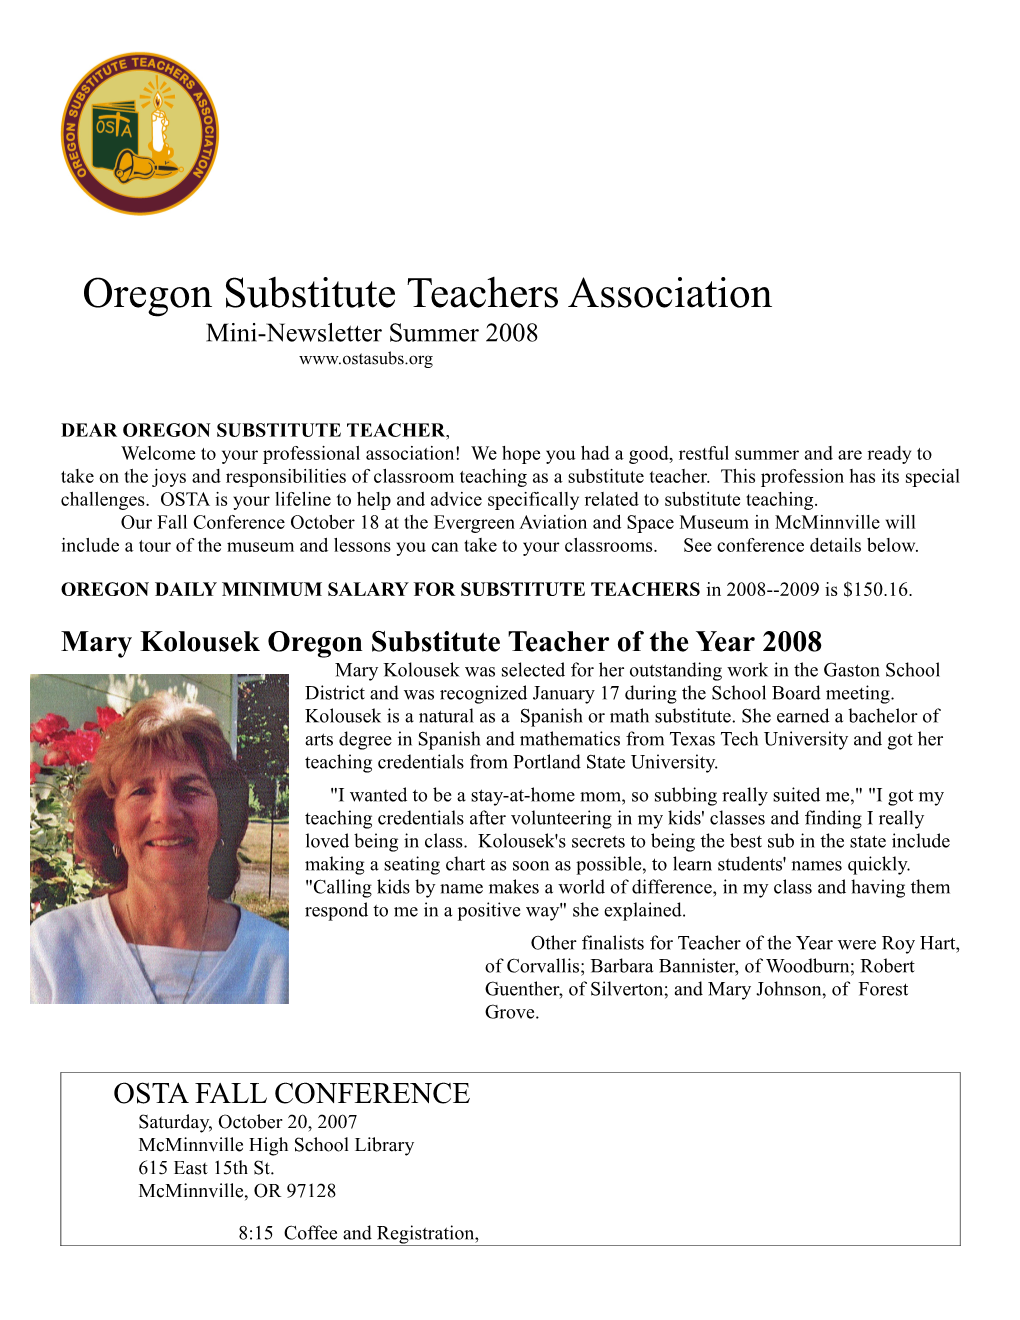 Oregon Substitute Teachers Association s1